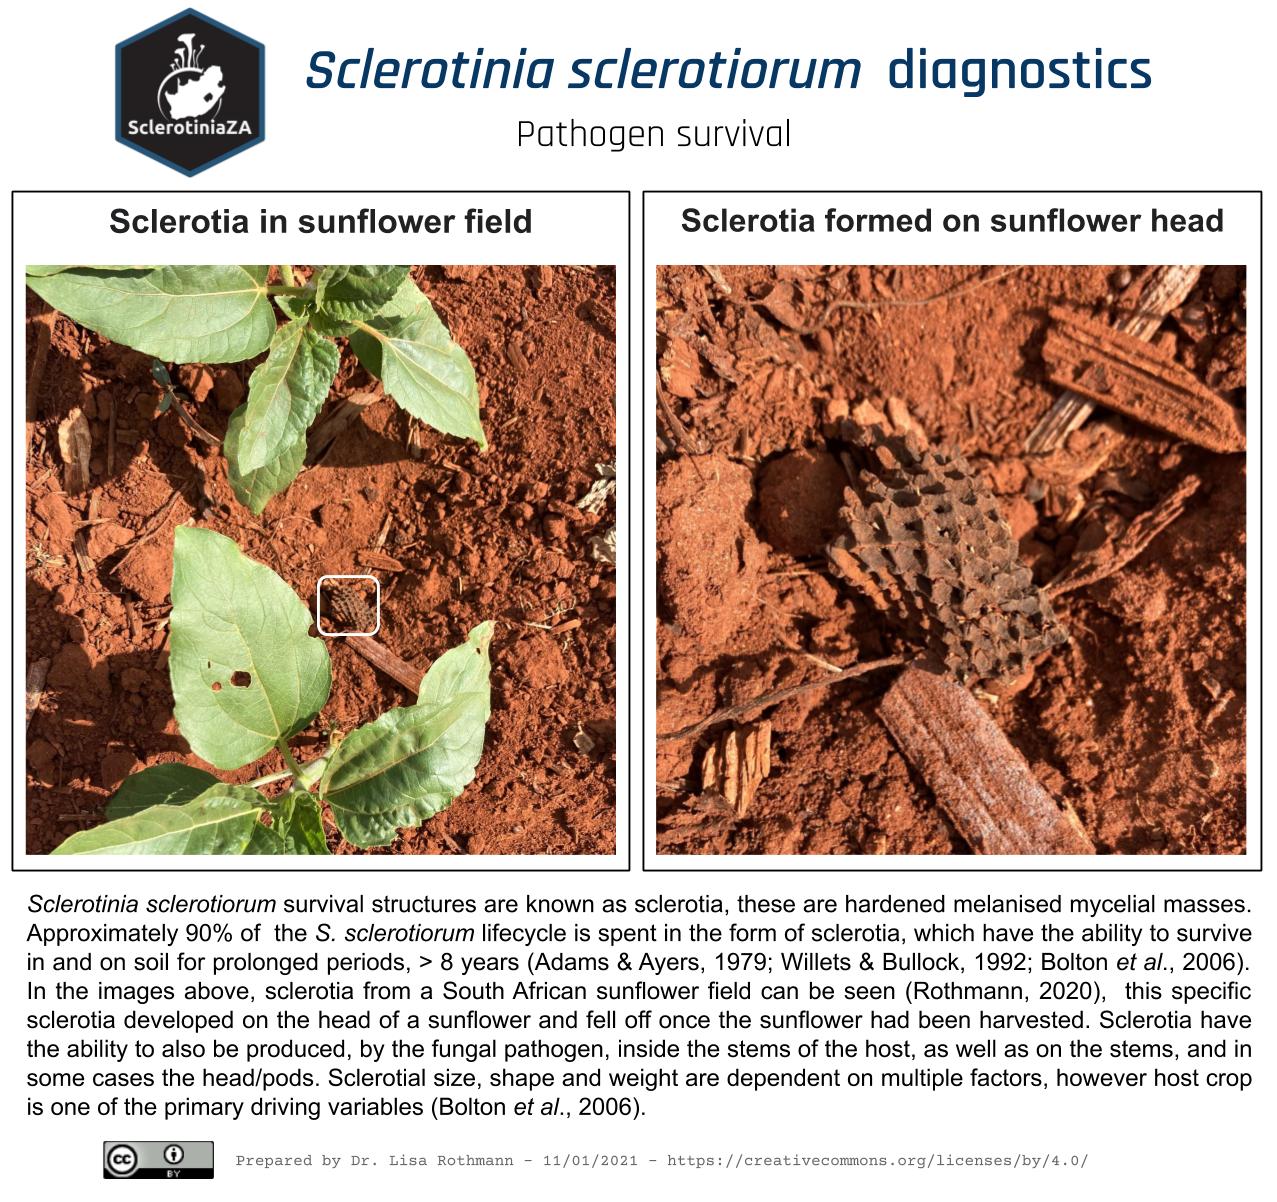 Sclerotia - the survival of Sclerotinia sclerotiorum